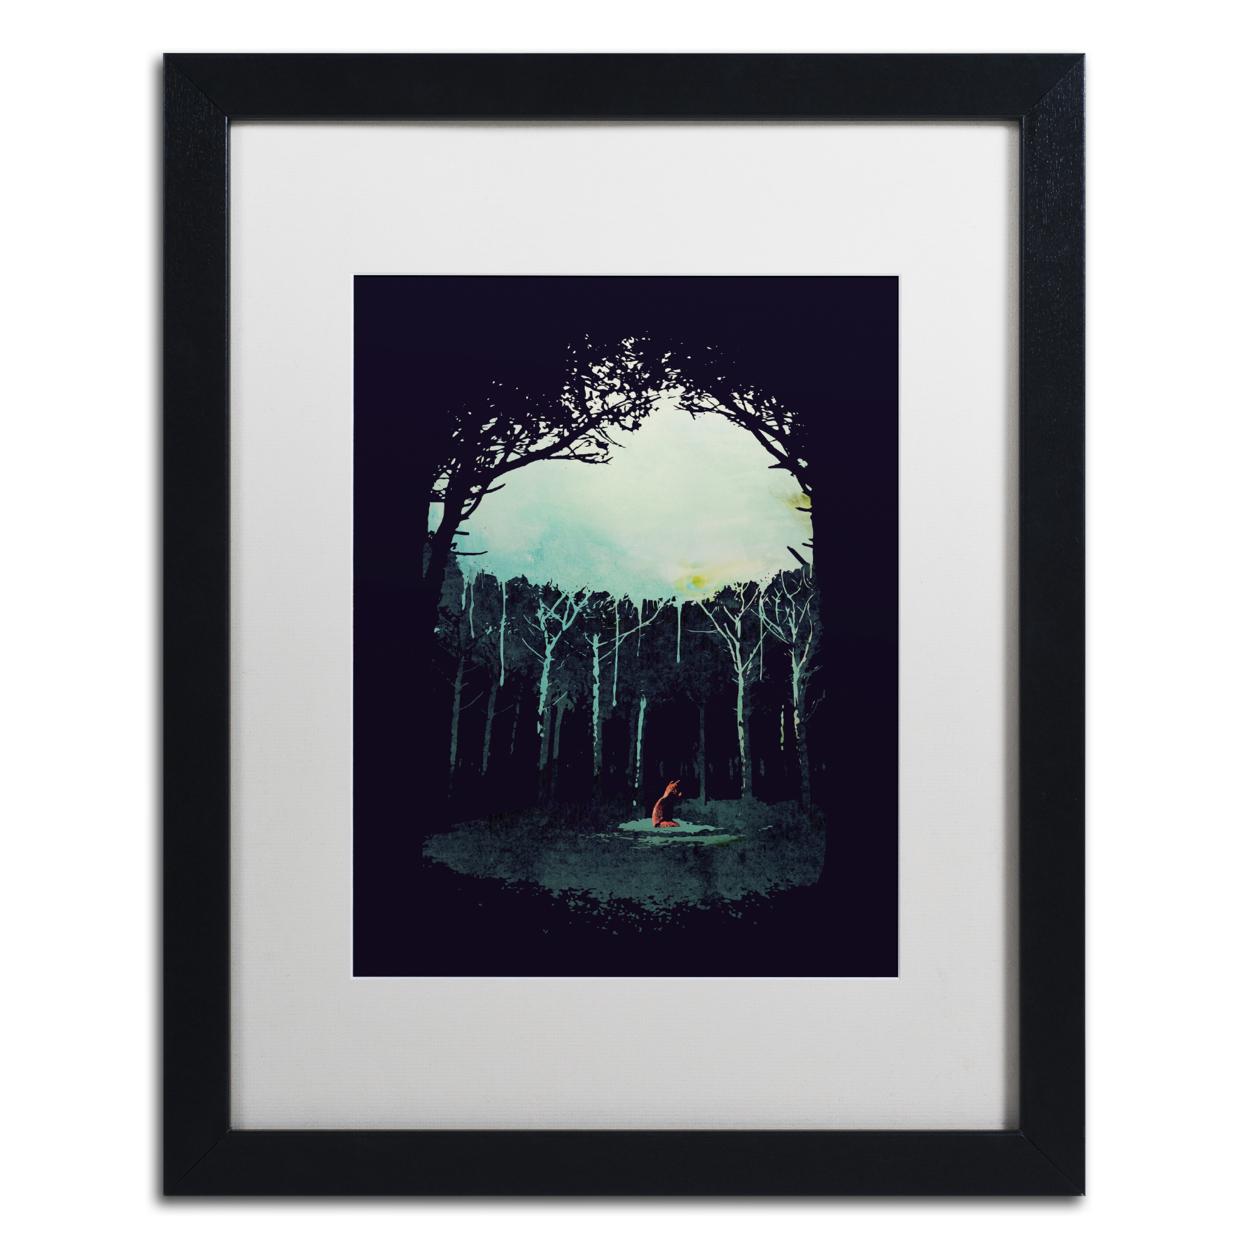 Robert Farkas 'Deep In The Forest' Black Wooden Framed Art 18 X 22 Inches